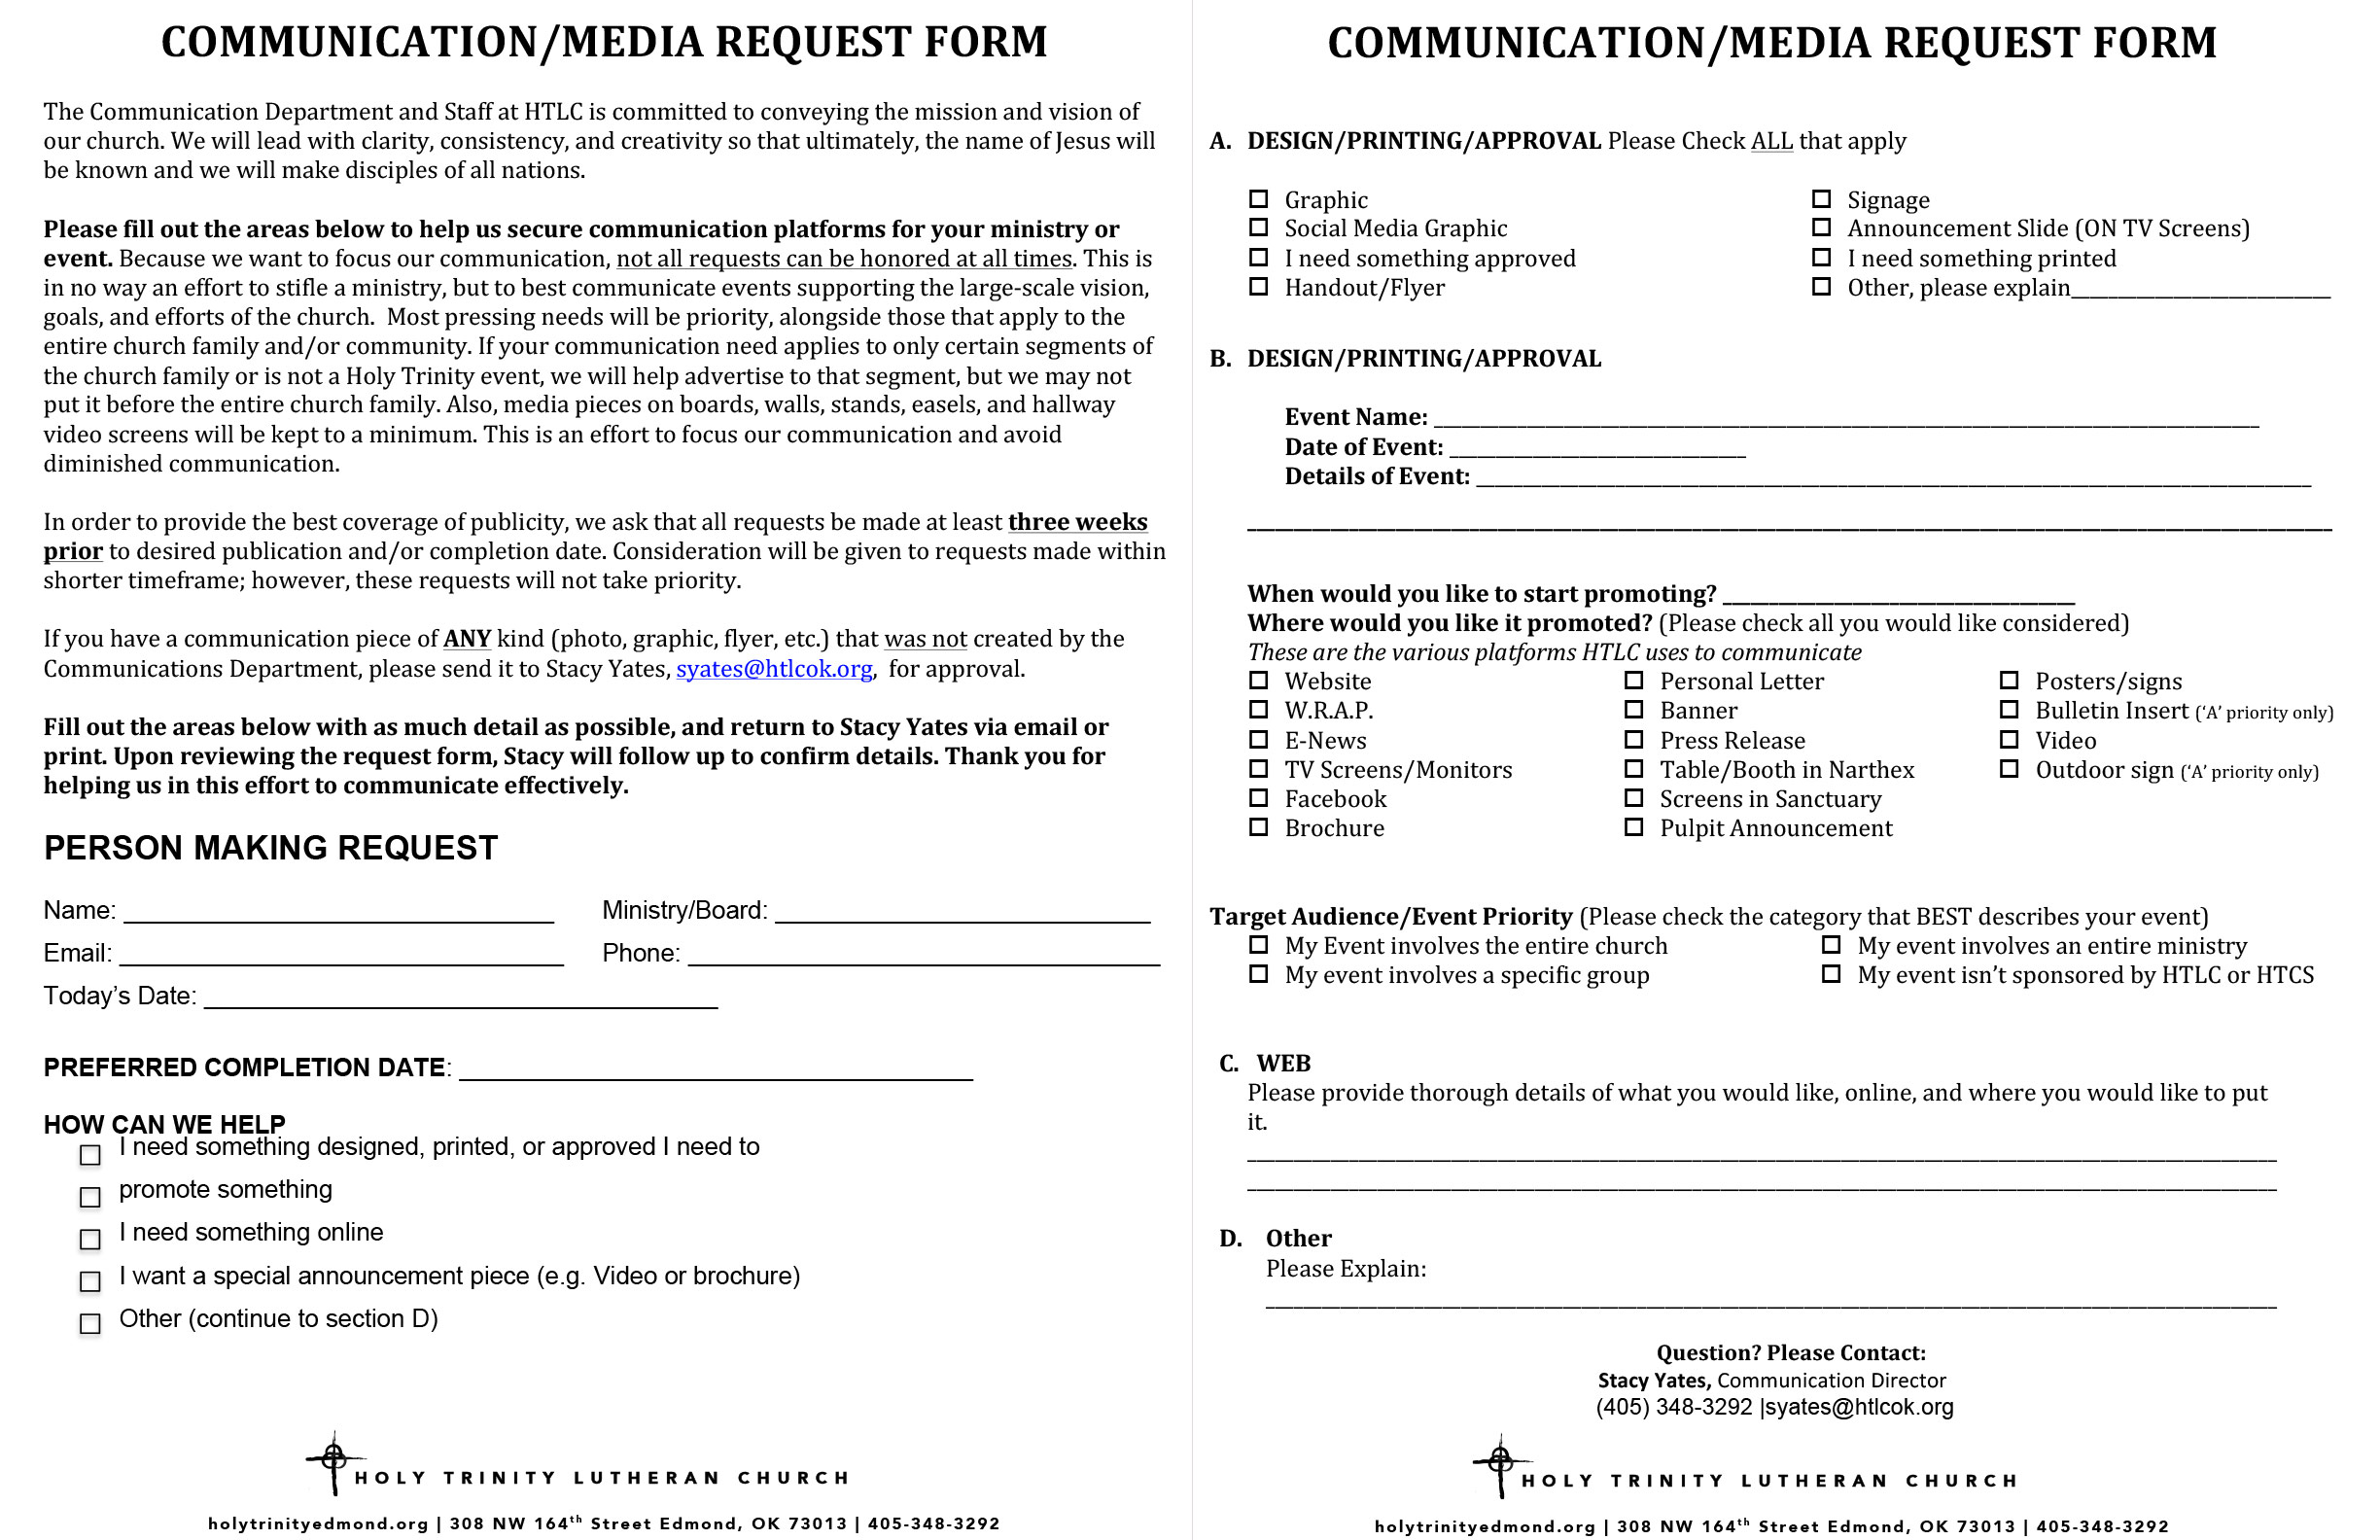 Communication/Media Request Form